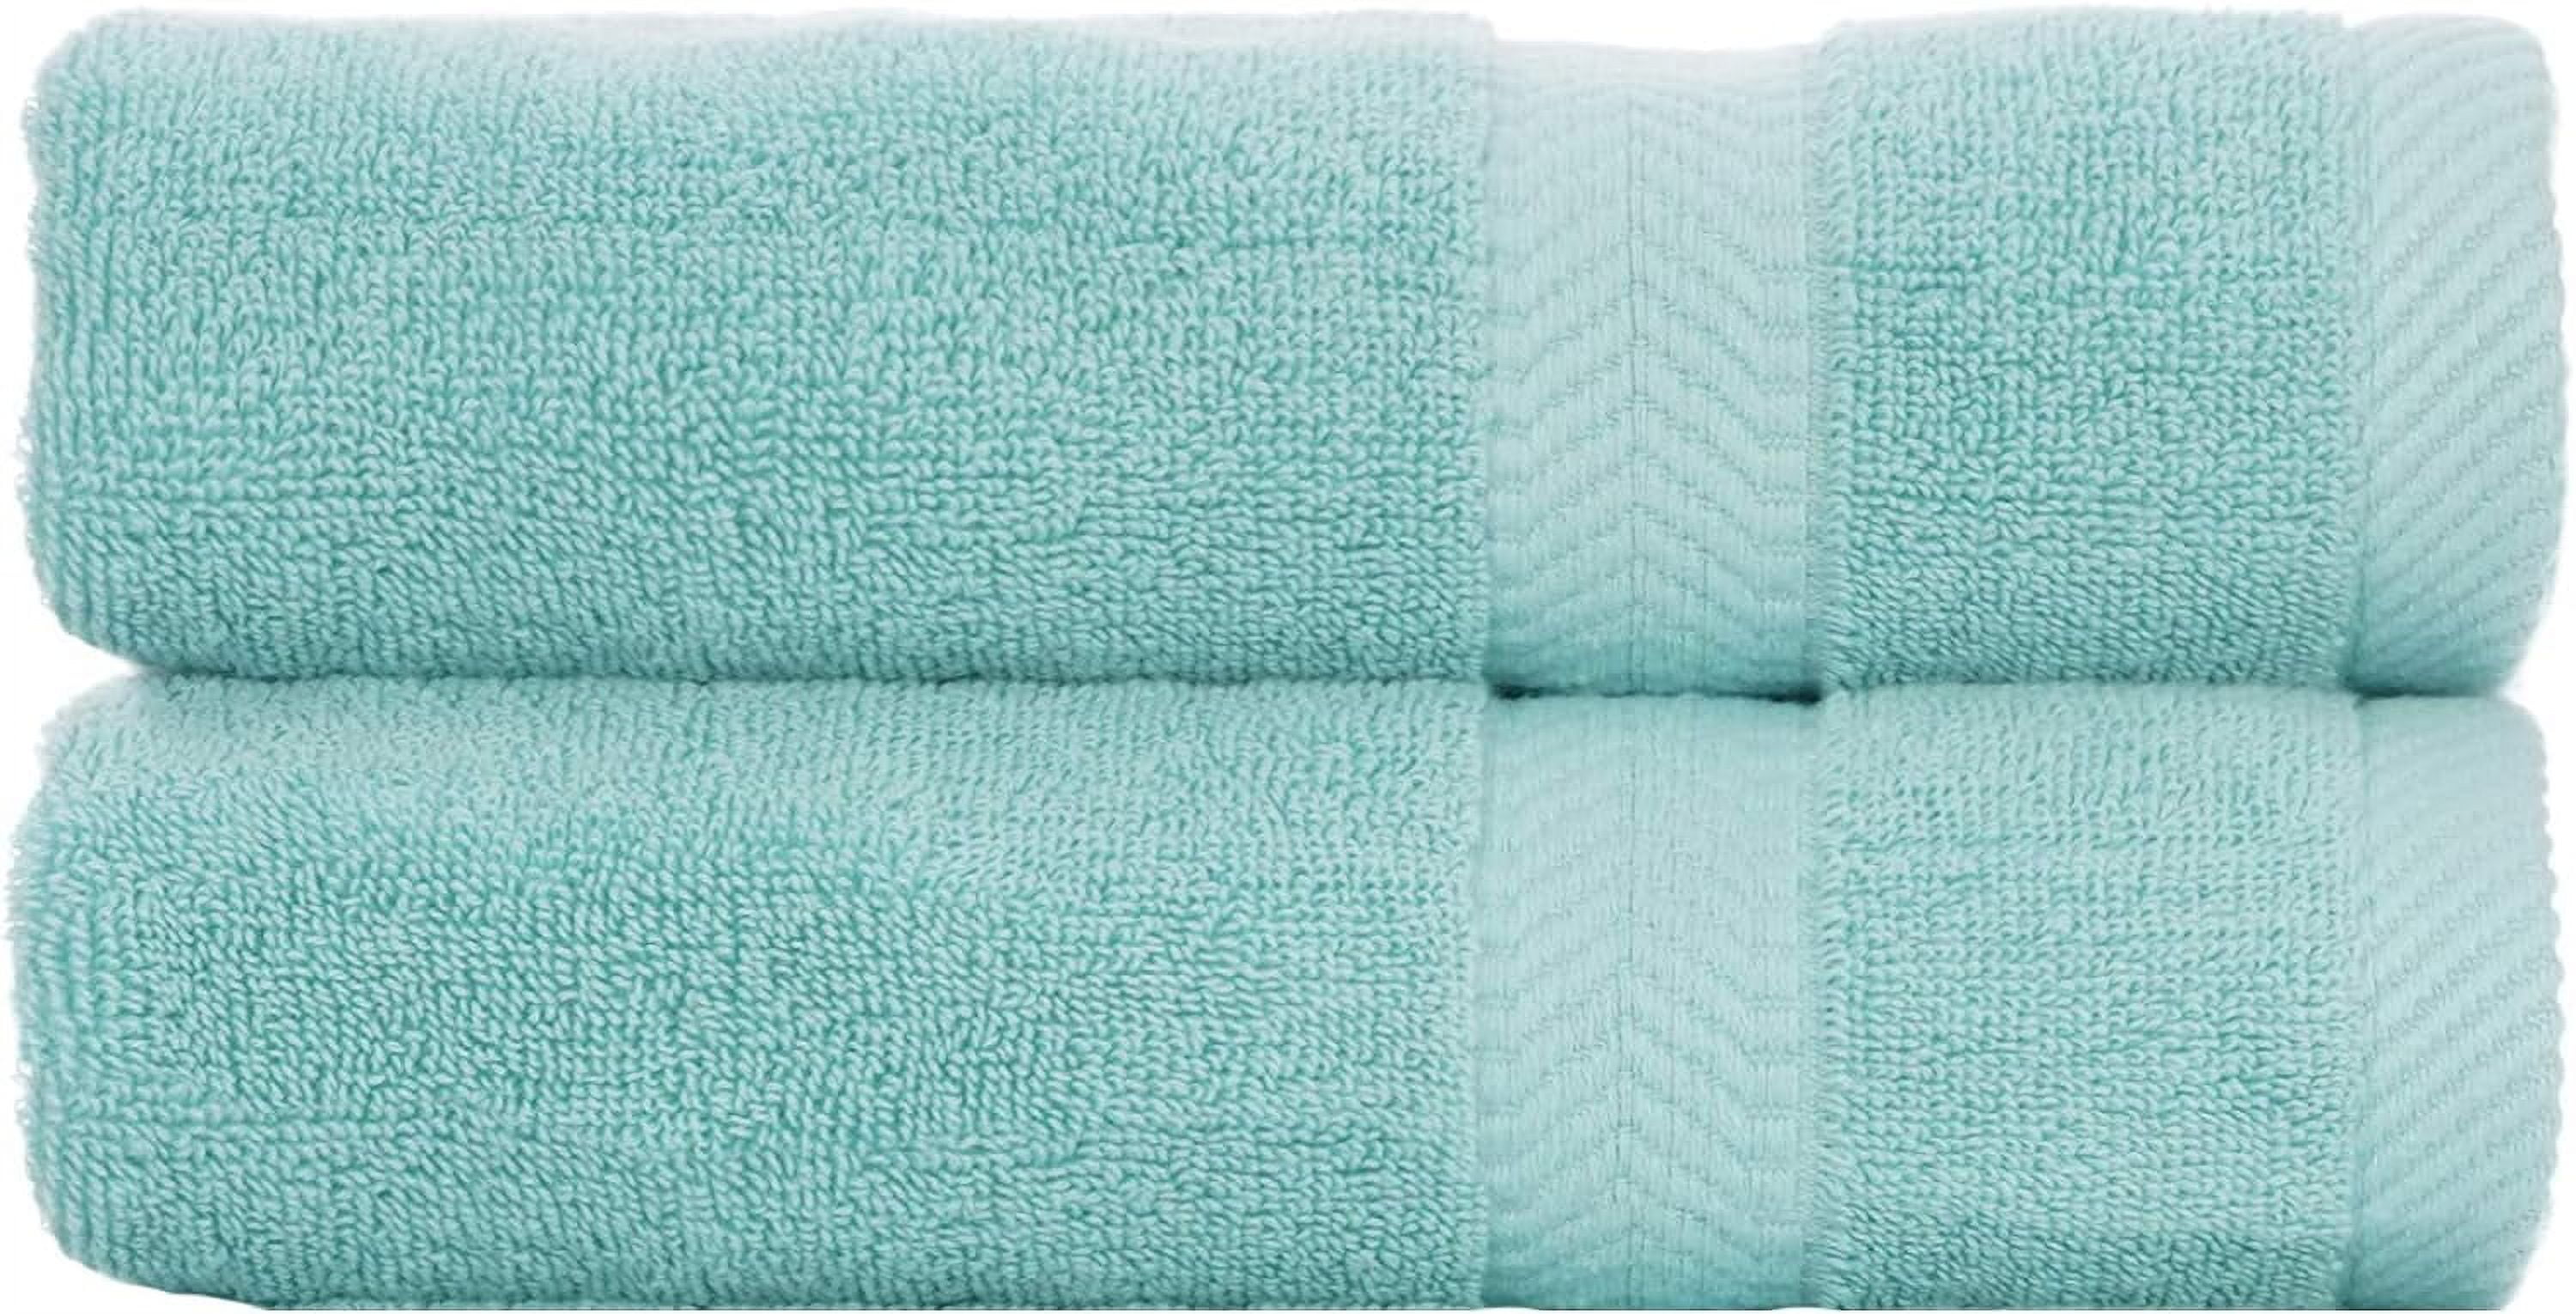 Premium Organic Cotton Bath Towels Plush Feather Touch Quick Dry Bath Sheet  Eco Friendly Towel 100% Cotton Loop Terry, Eggplant Set of 2